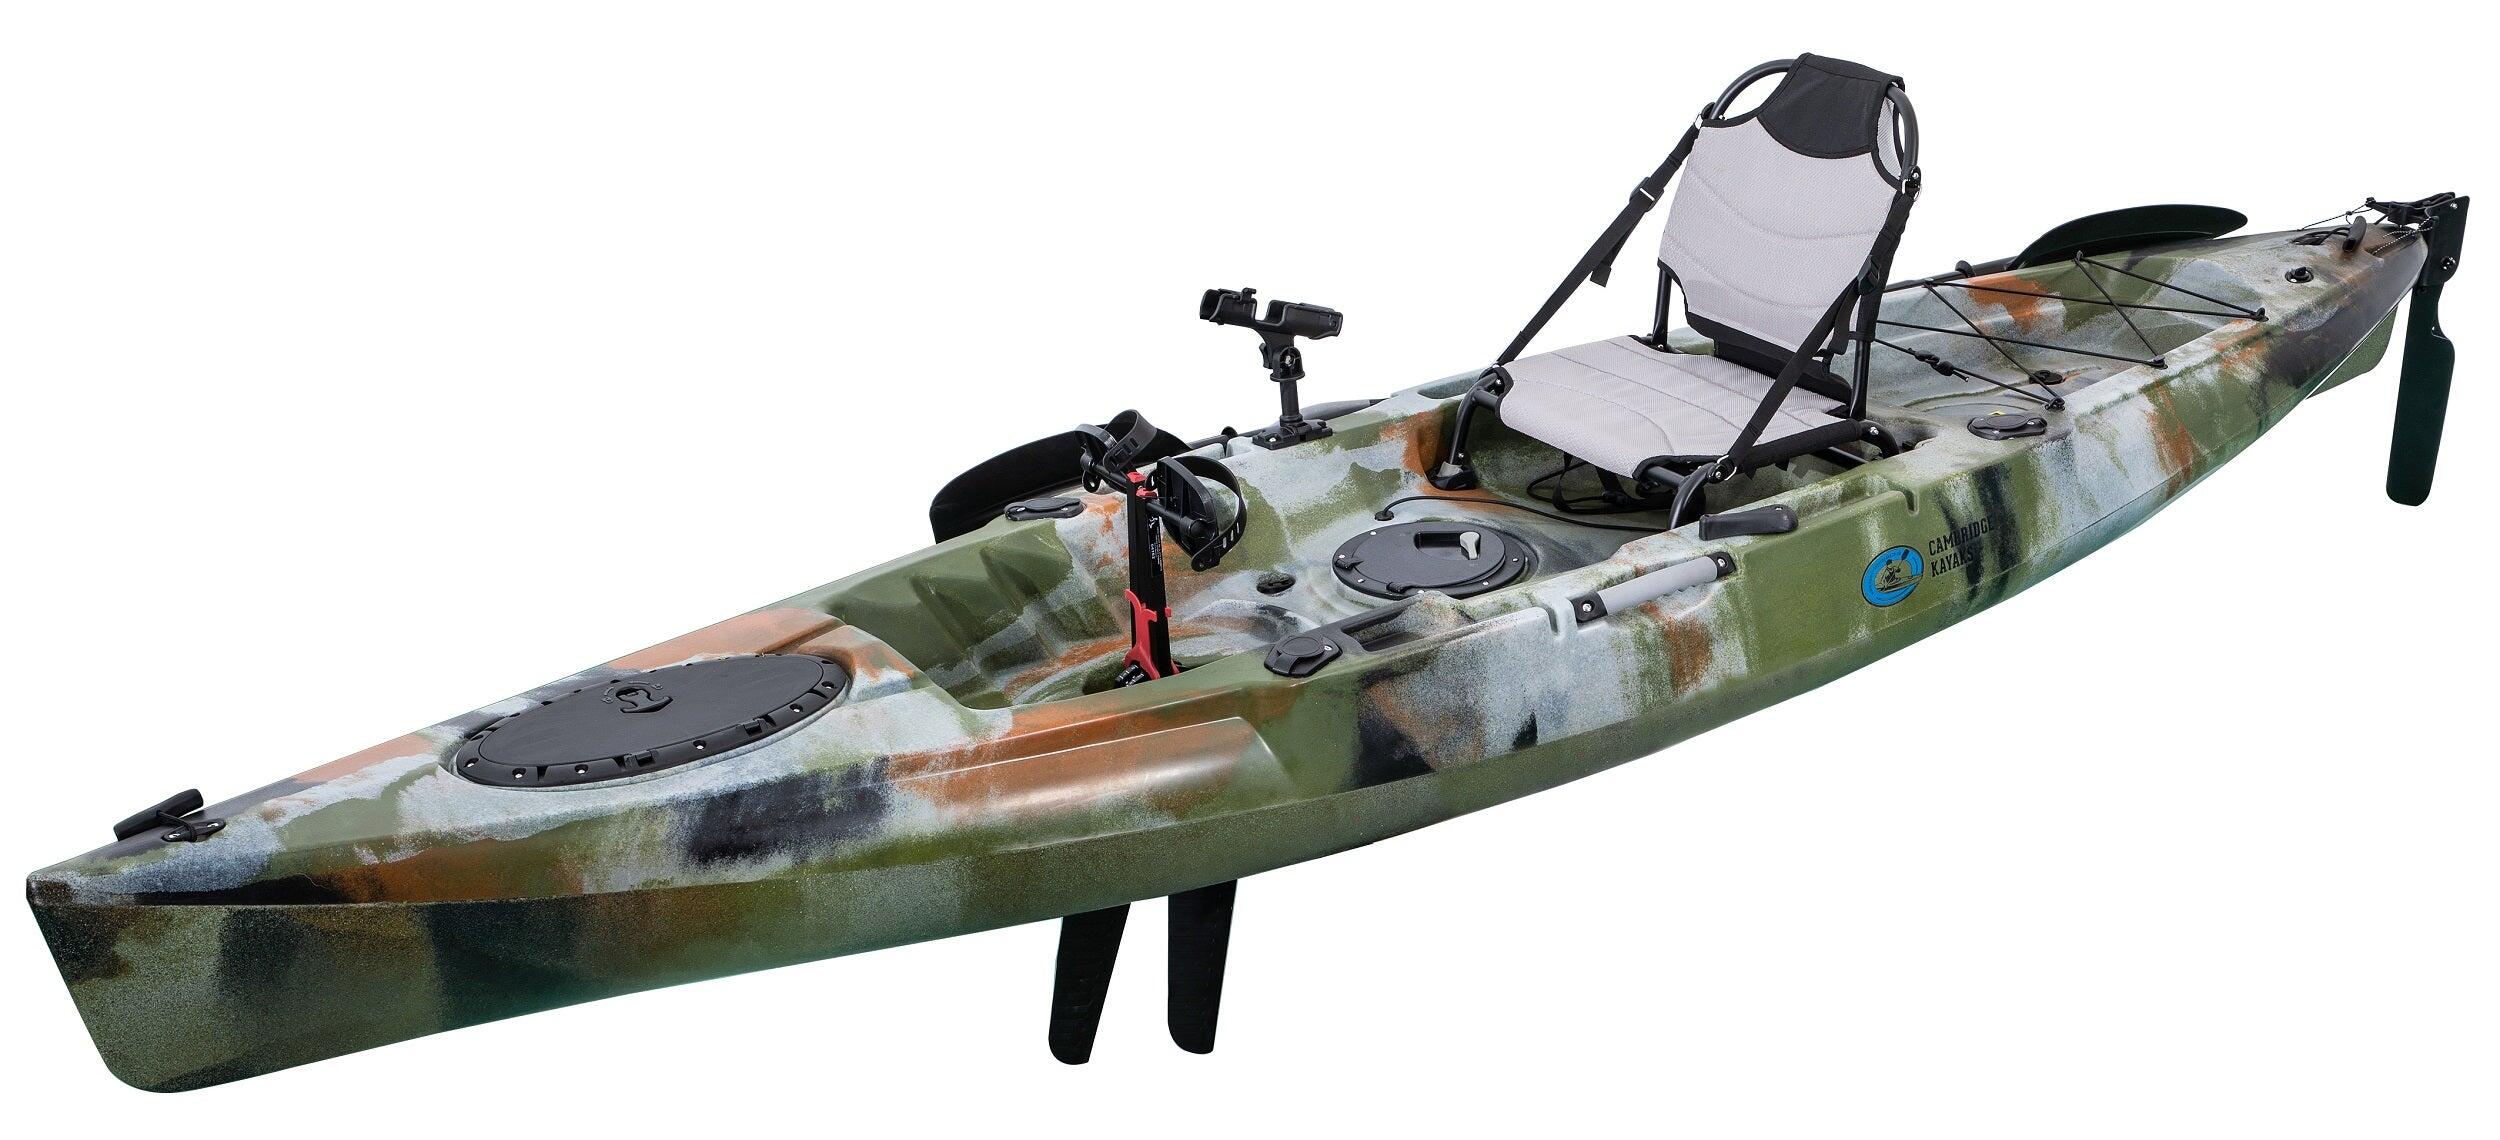 Cambridge Kayaks Sailfish Sea Fishing Kayak With Pro Pedal Drive System